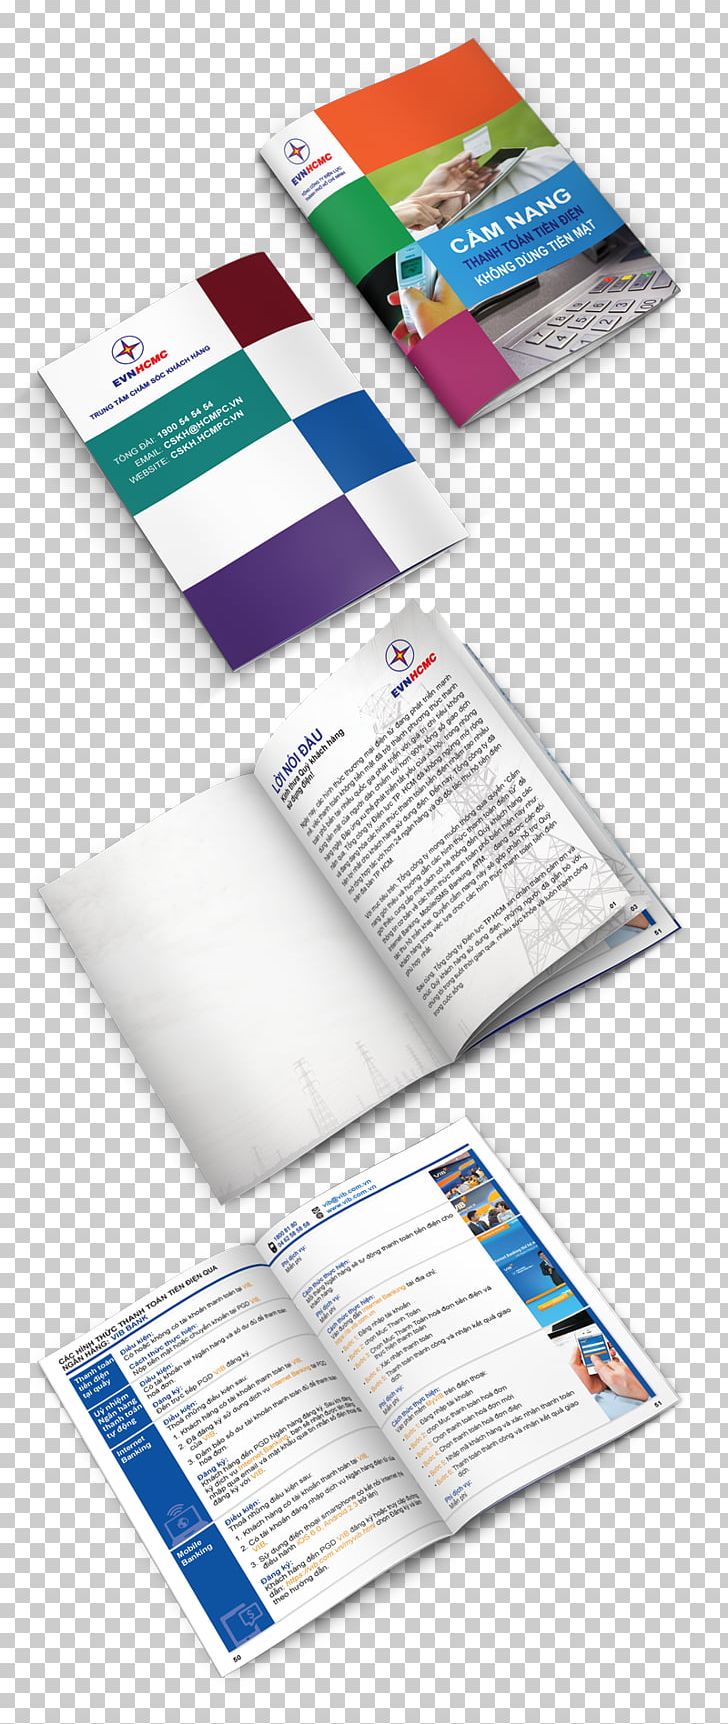 logo-brand-png-clipart-art-brand-brochure-gecko-graphic-design